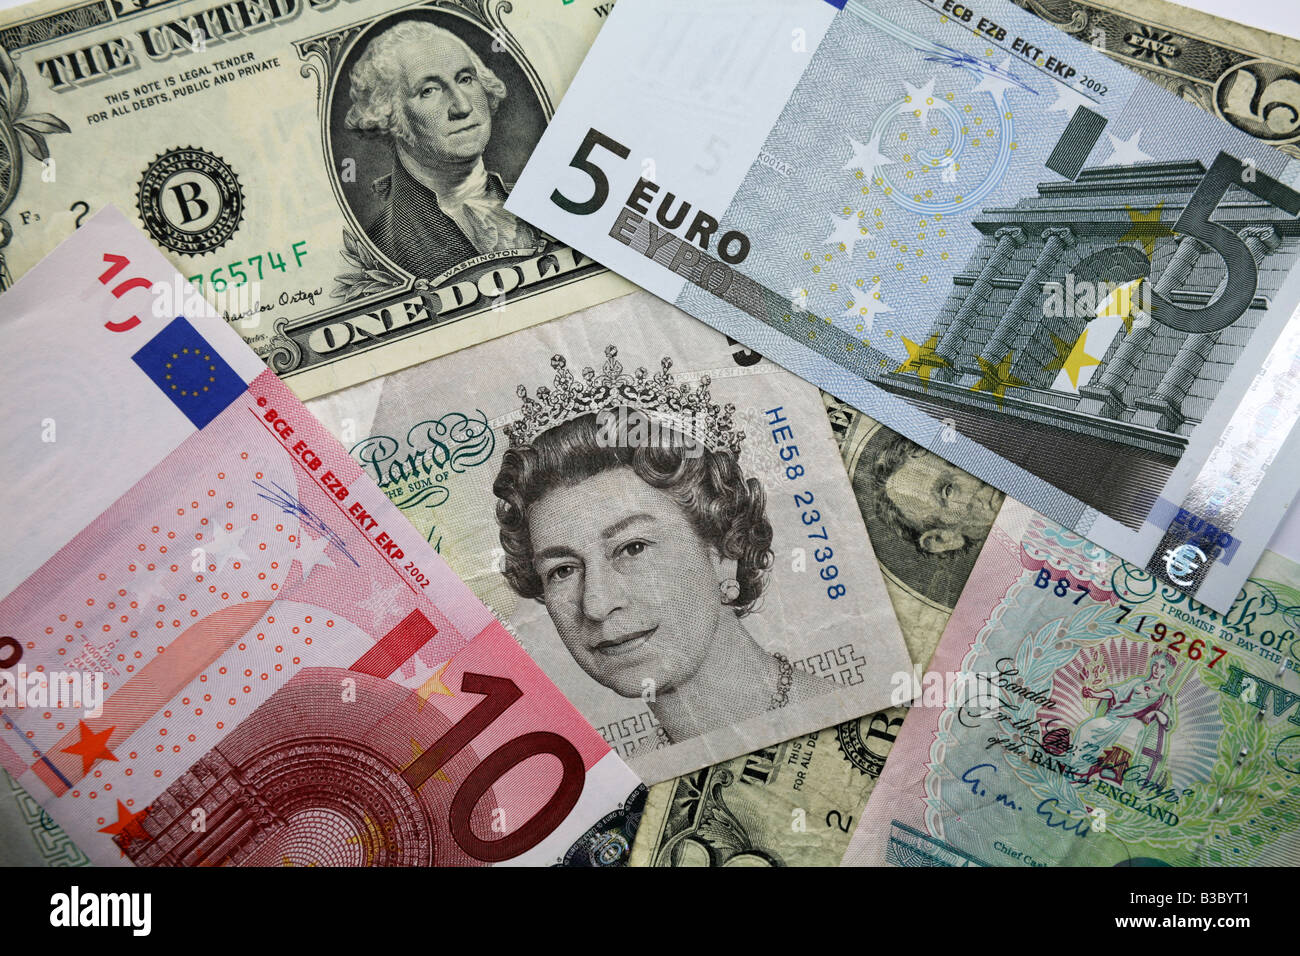 Bank notes from UK, USA, EURO representing world power Stock Photo